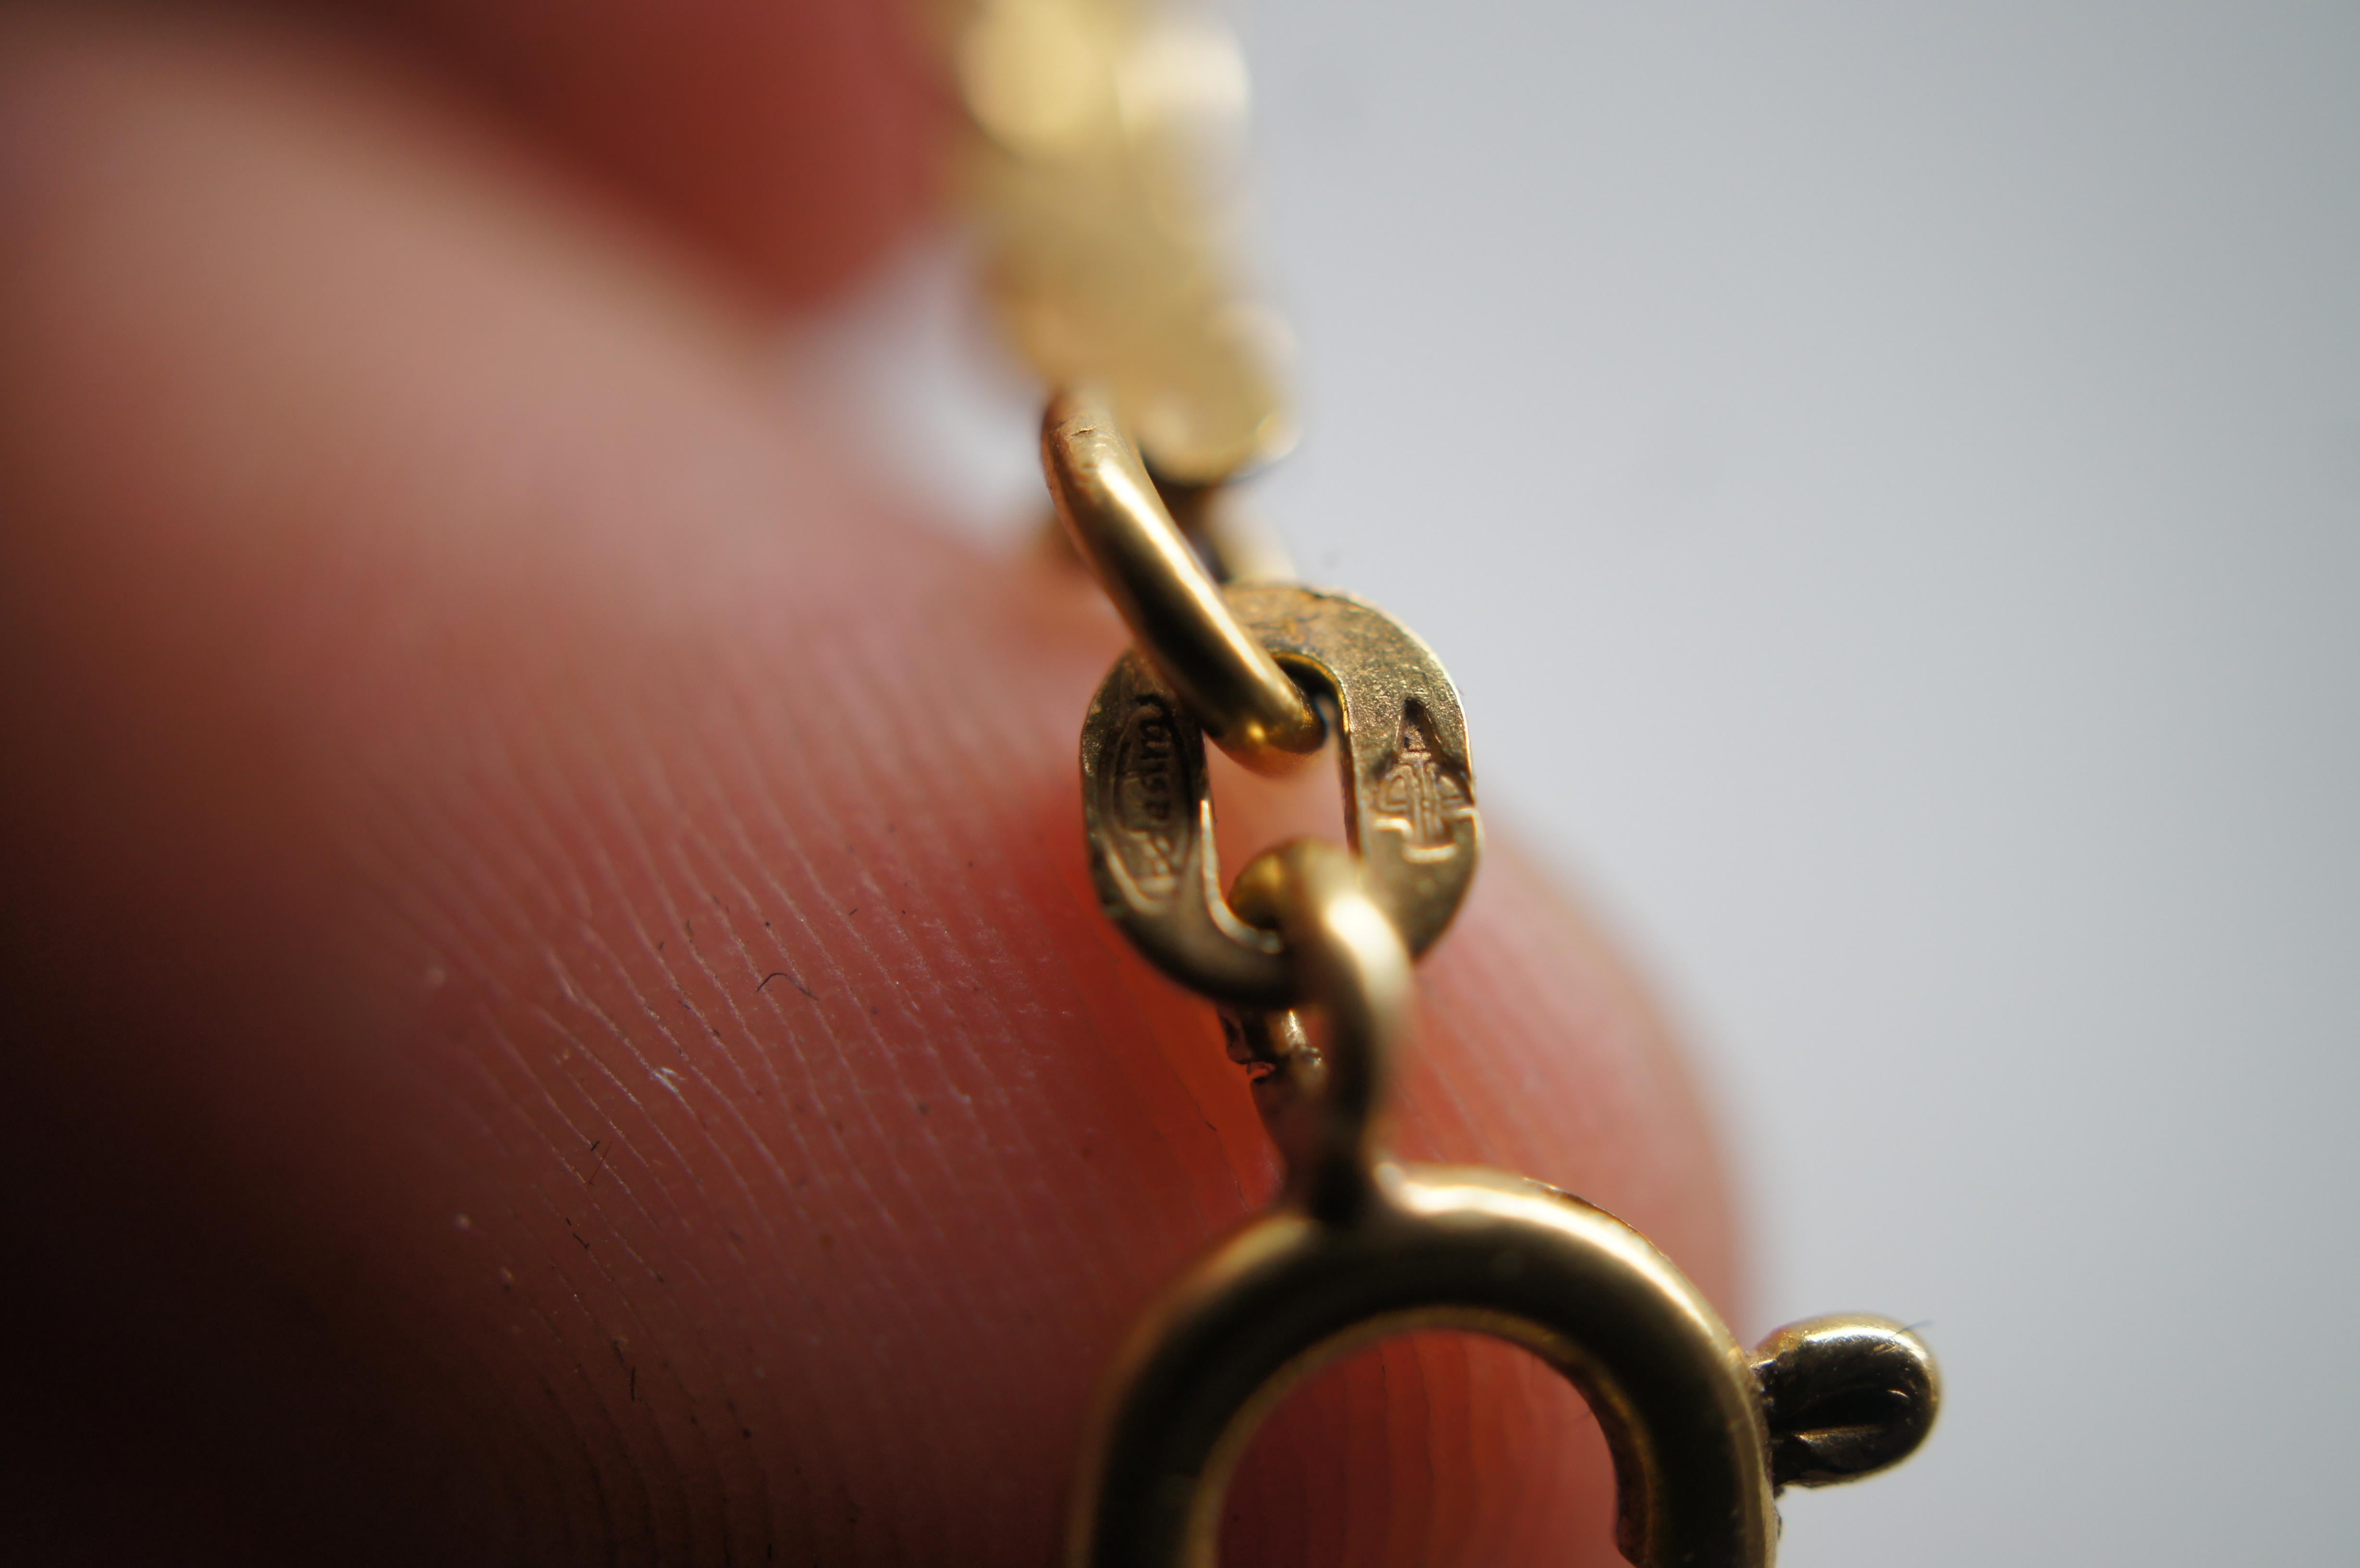 Balestra & Figli 18K Gold 3mm Flat Serpentine Chain Necklace Italy 25g 27